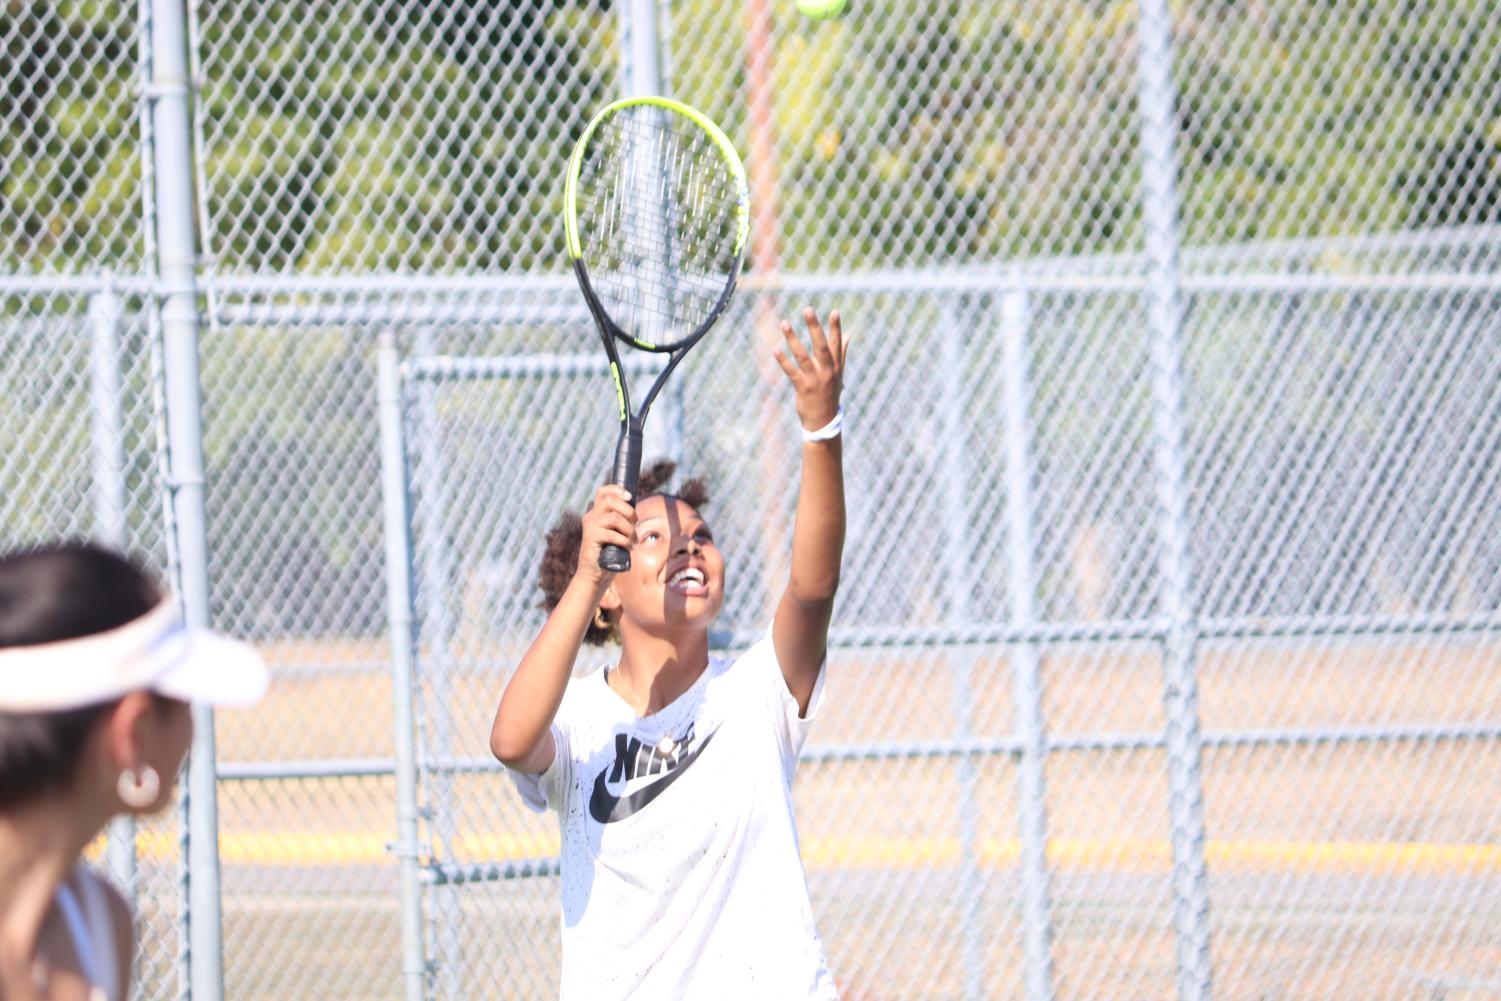 Tennis+practice+%28Photos+by+Lindsay+Tyrell-Blake%29